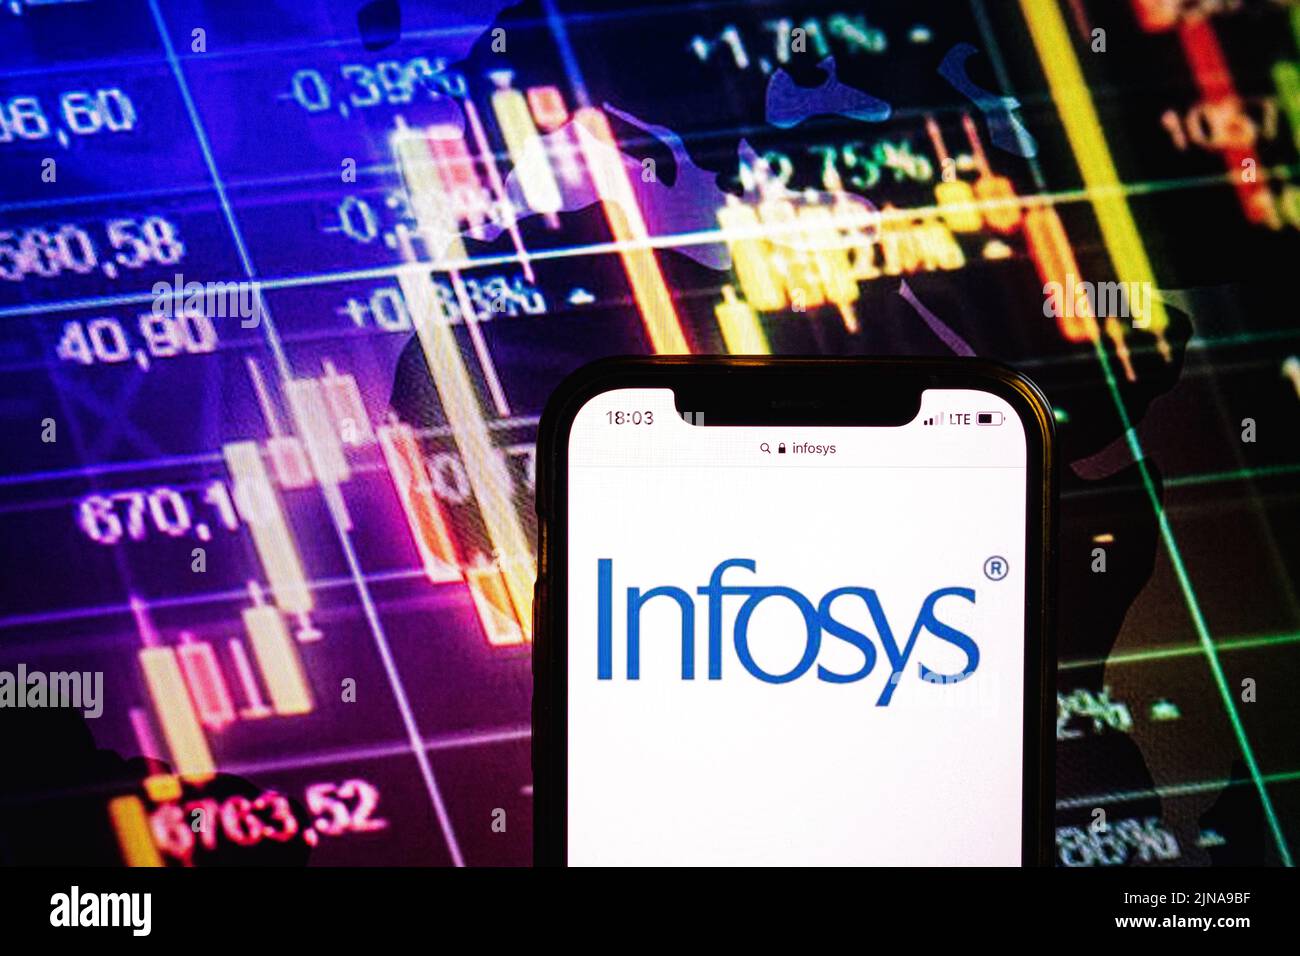 KONSKIE, POLAND - August 09, 2022: Smartphone displaying logo of Infosys company on stock exchange diagram background Stock Photo